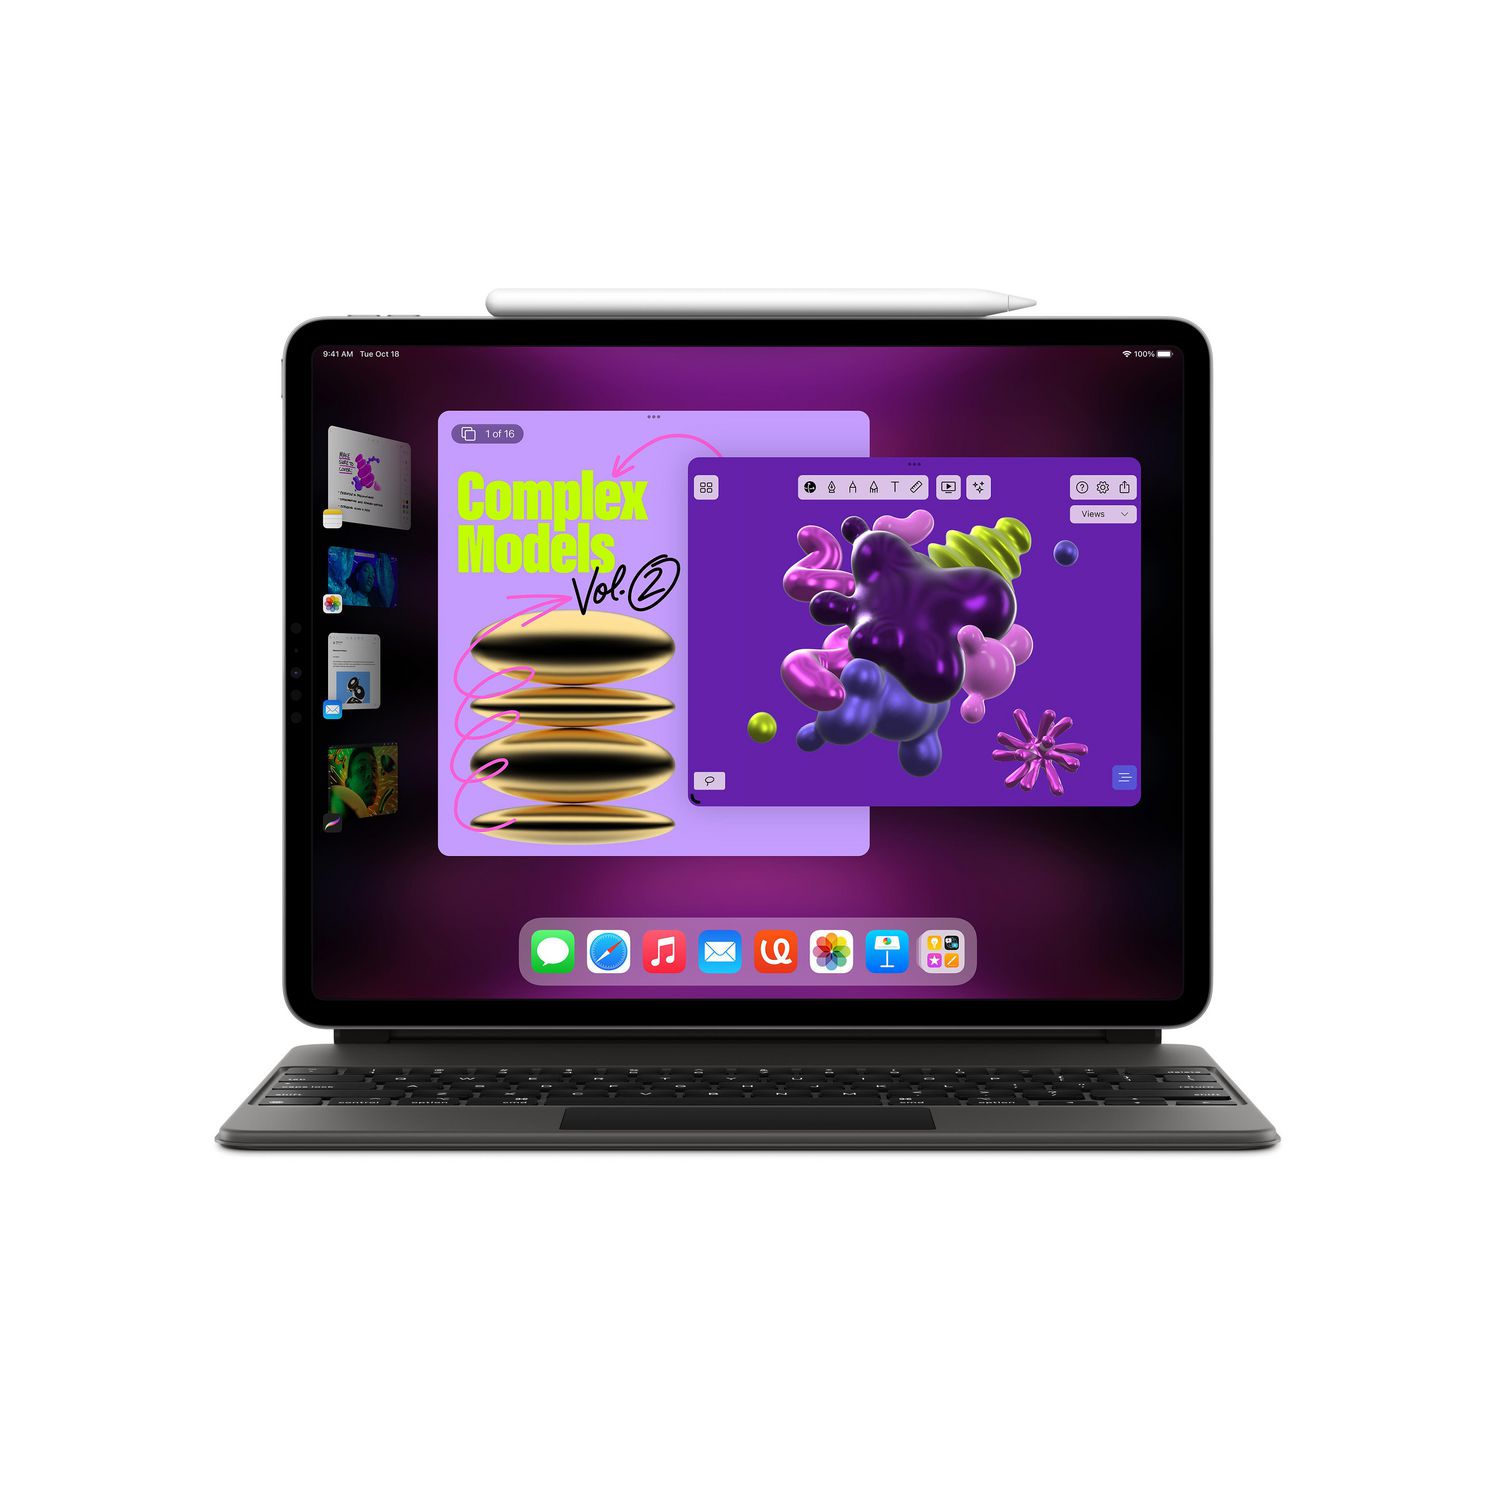 iPad Pro 12.9-inch Space Grey 256g Wi-Fi | Walmart Canada